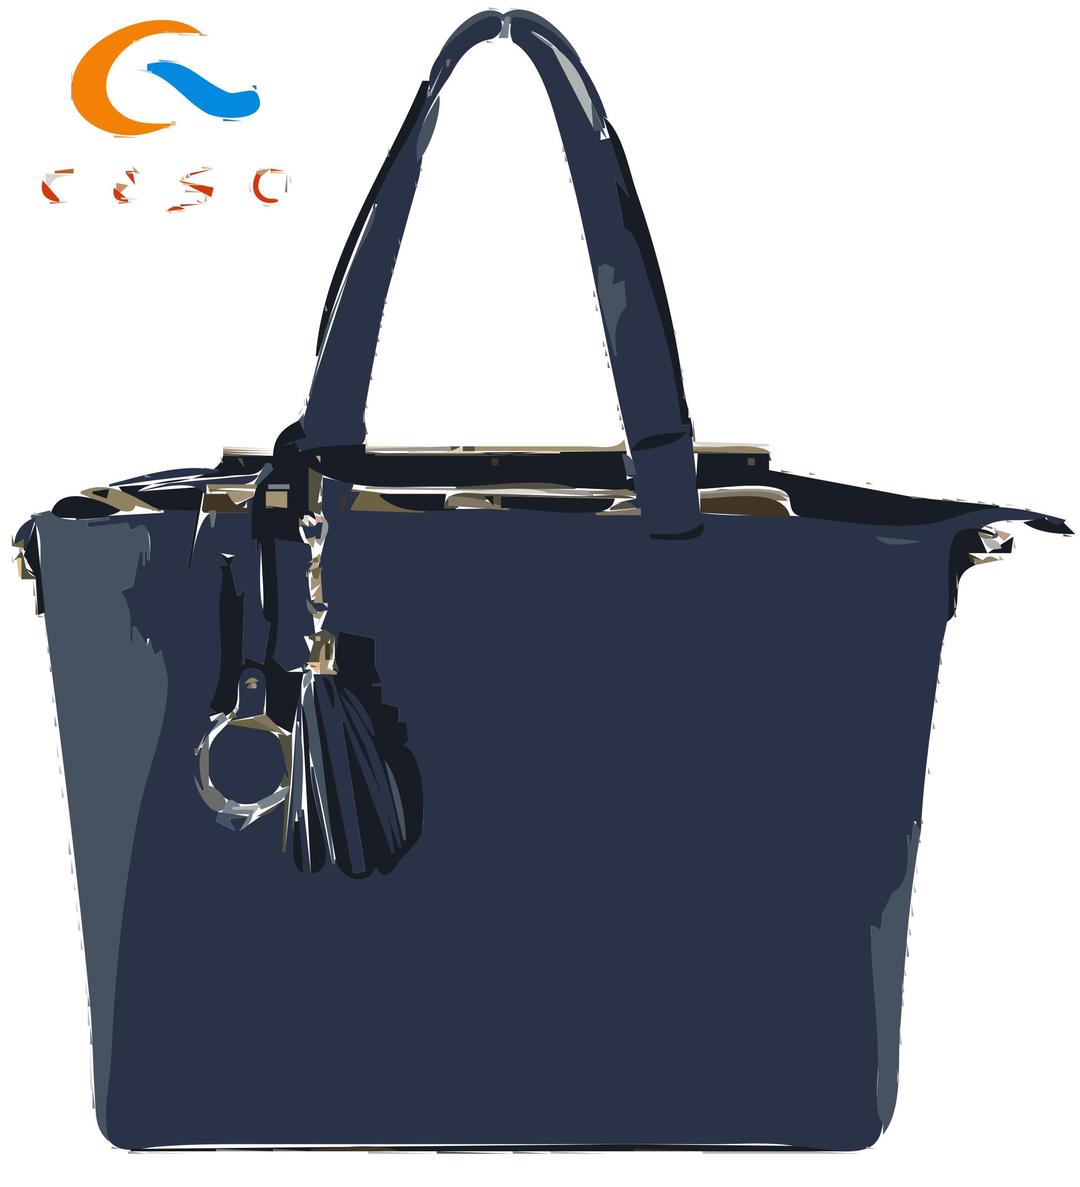 Blue Flat Bag with Logo png transparent